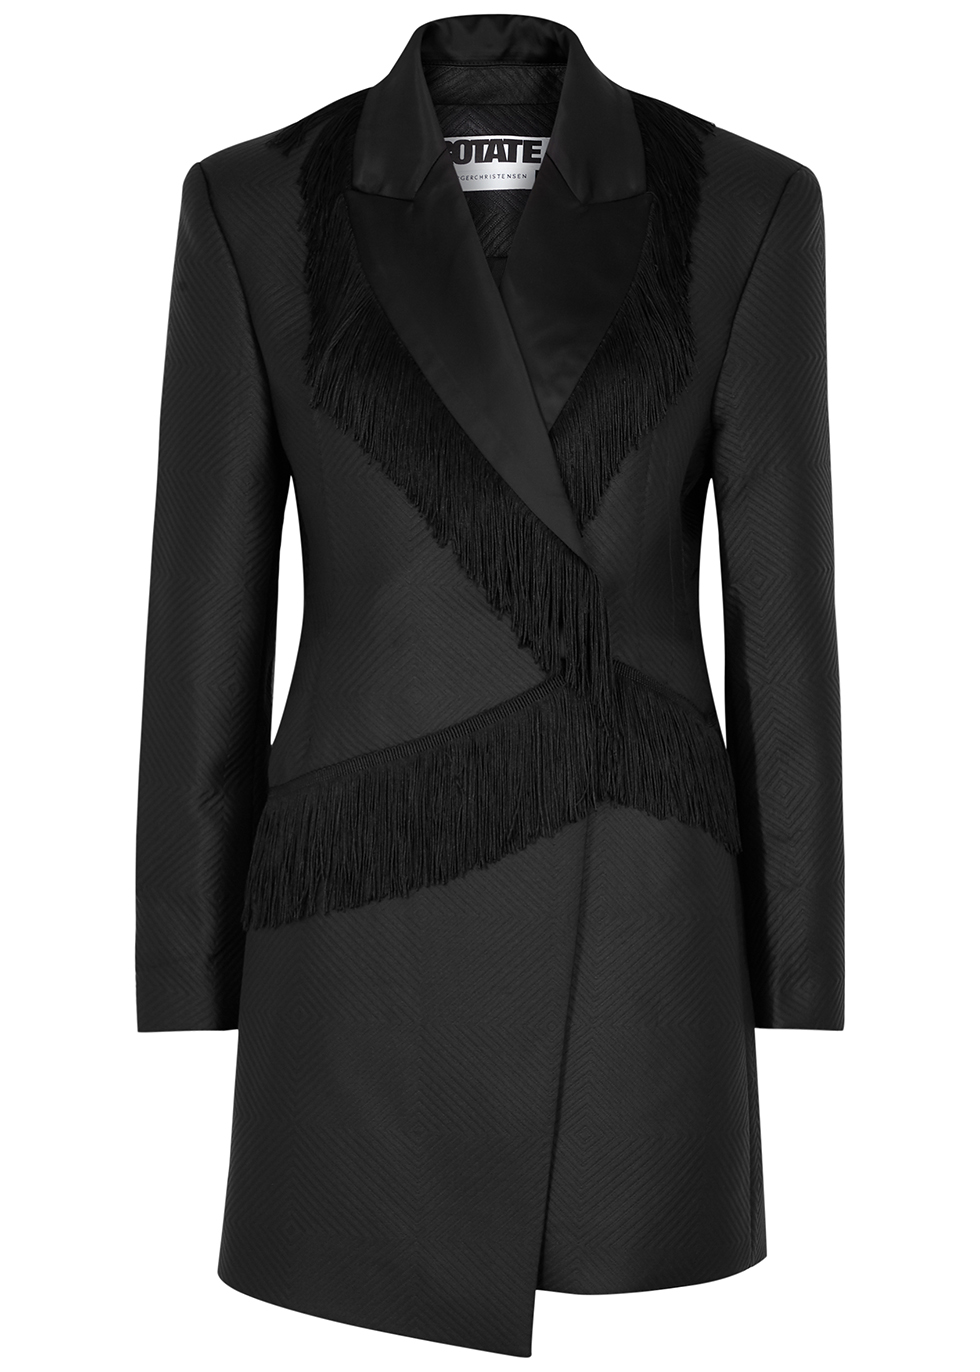 Shannon black fringe-trimmed blazer dress